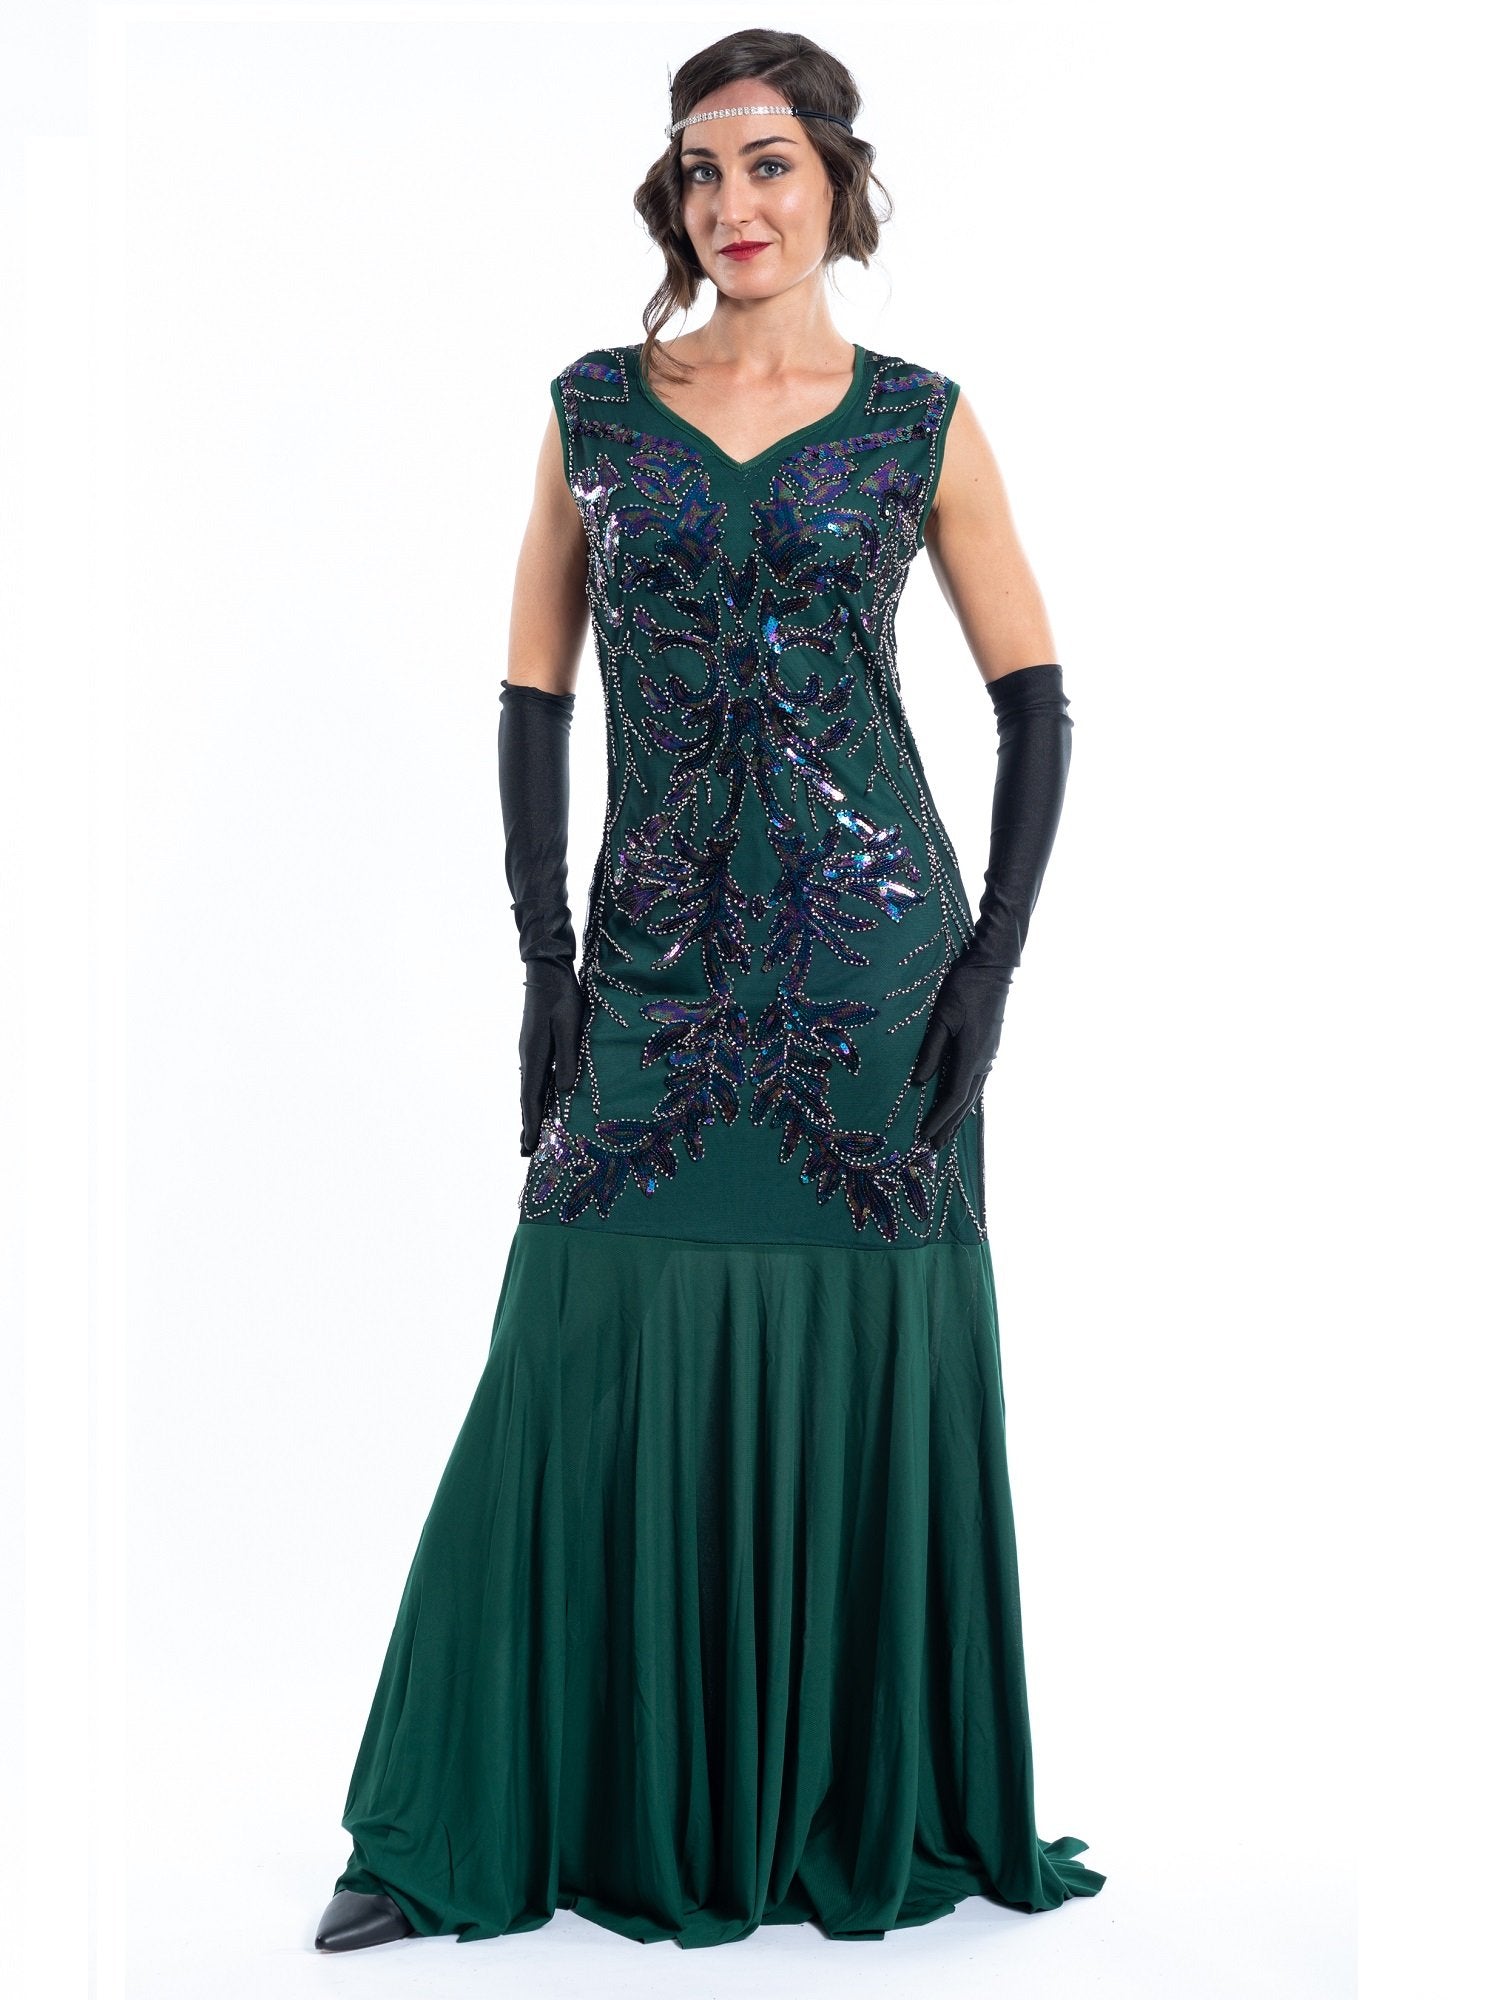 Stunning Long 1920s Dresses, Great Gatsby & Flapper Styles